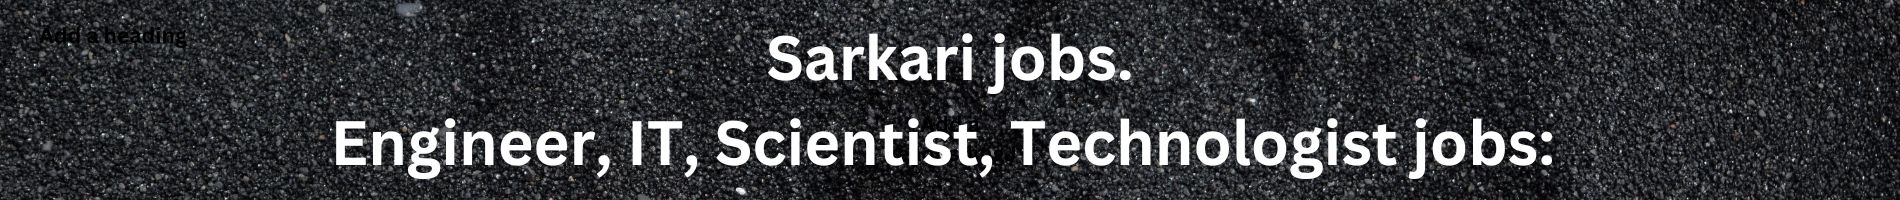 Sarkari jobs. Engineer, IT, Scientist, Technologist jobs: